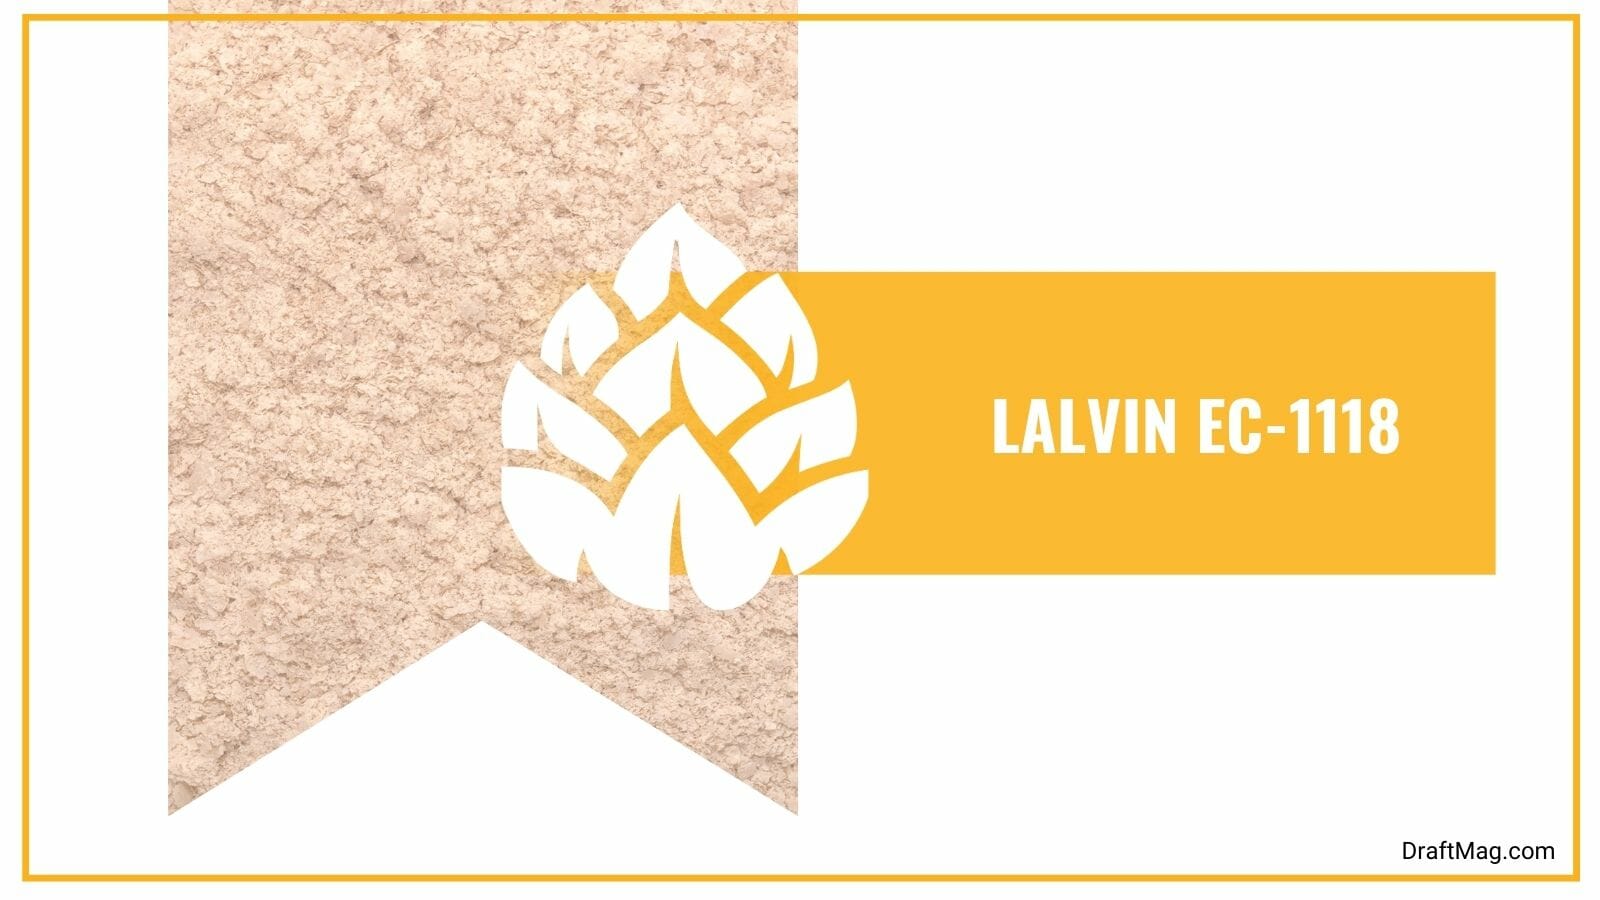 Lalvin EC-1118